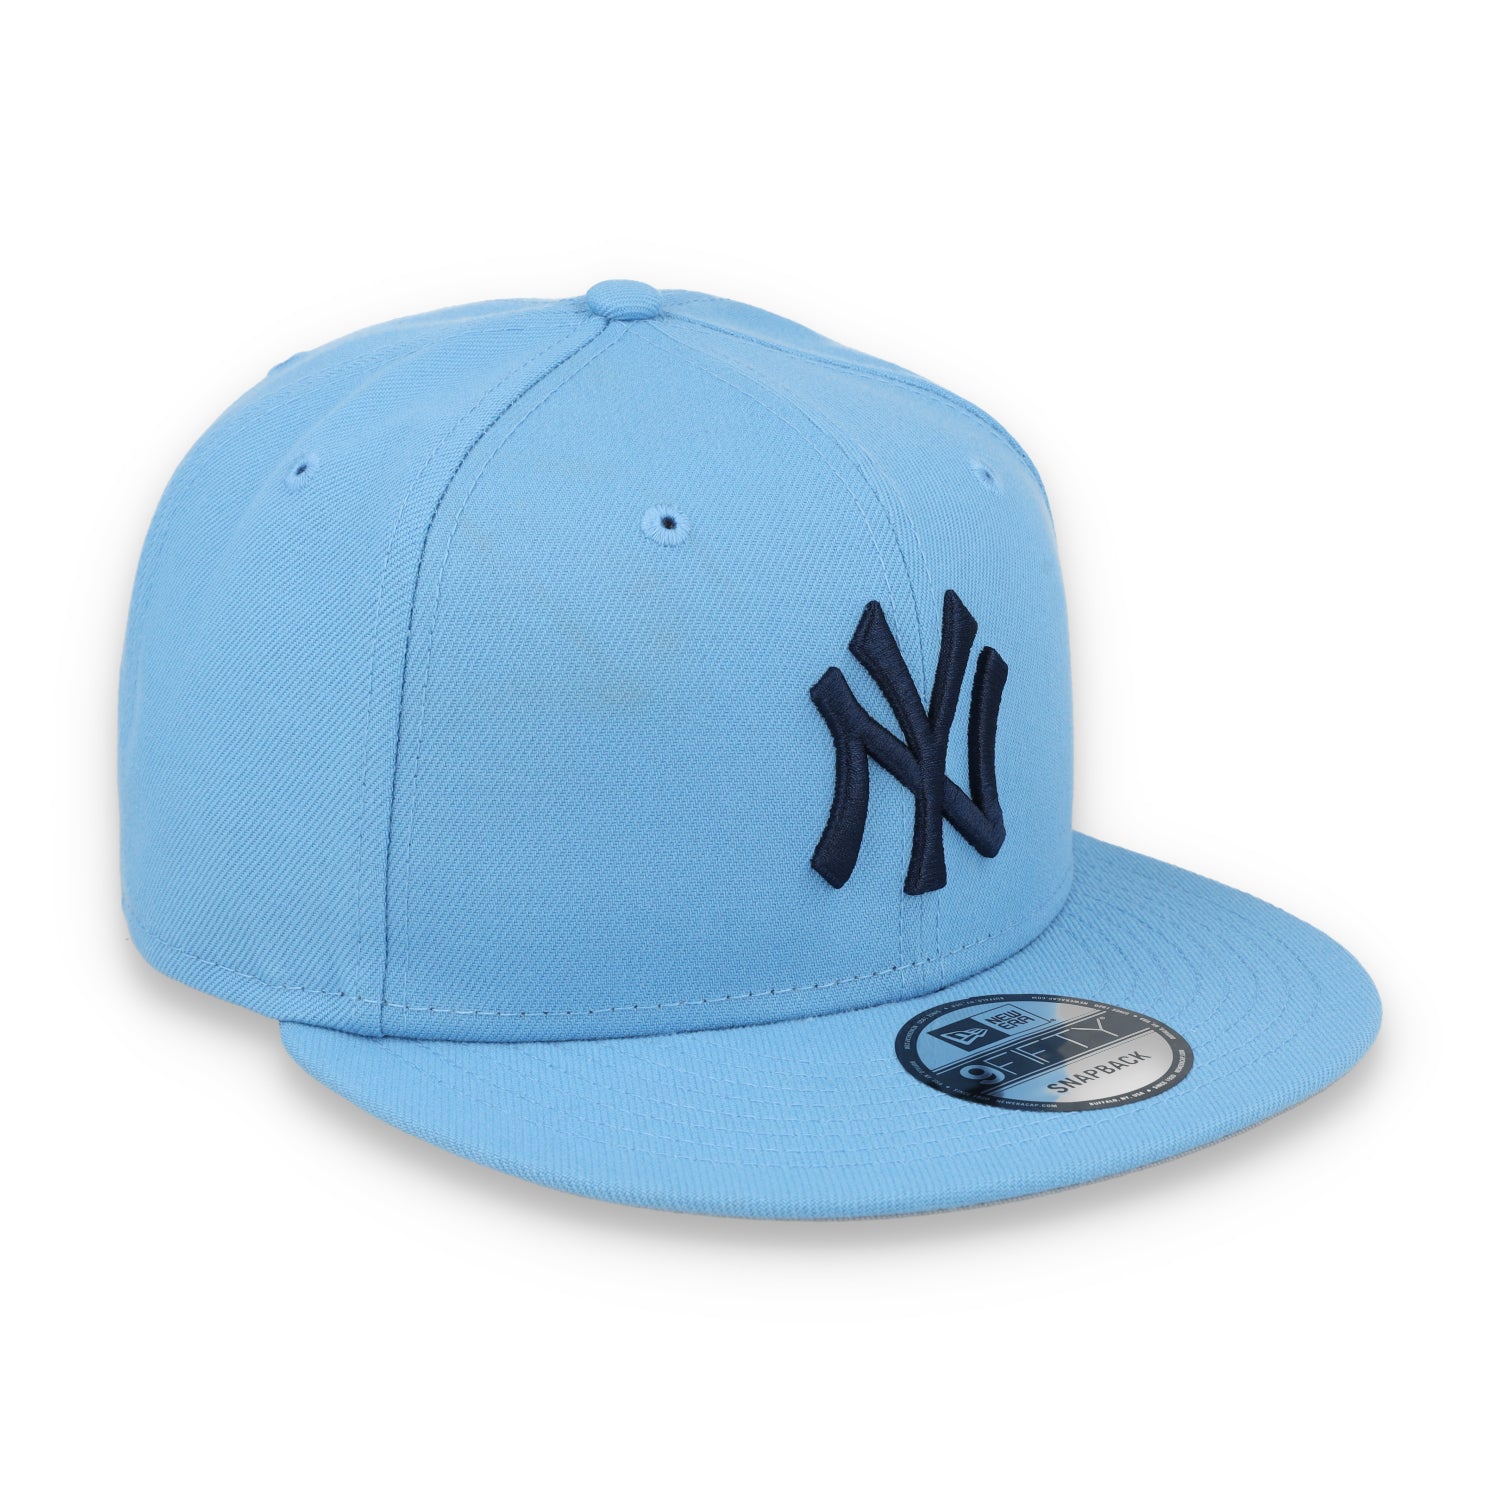 New Era New York Yankees 9FIFTY Snapback Hat - evergreen